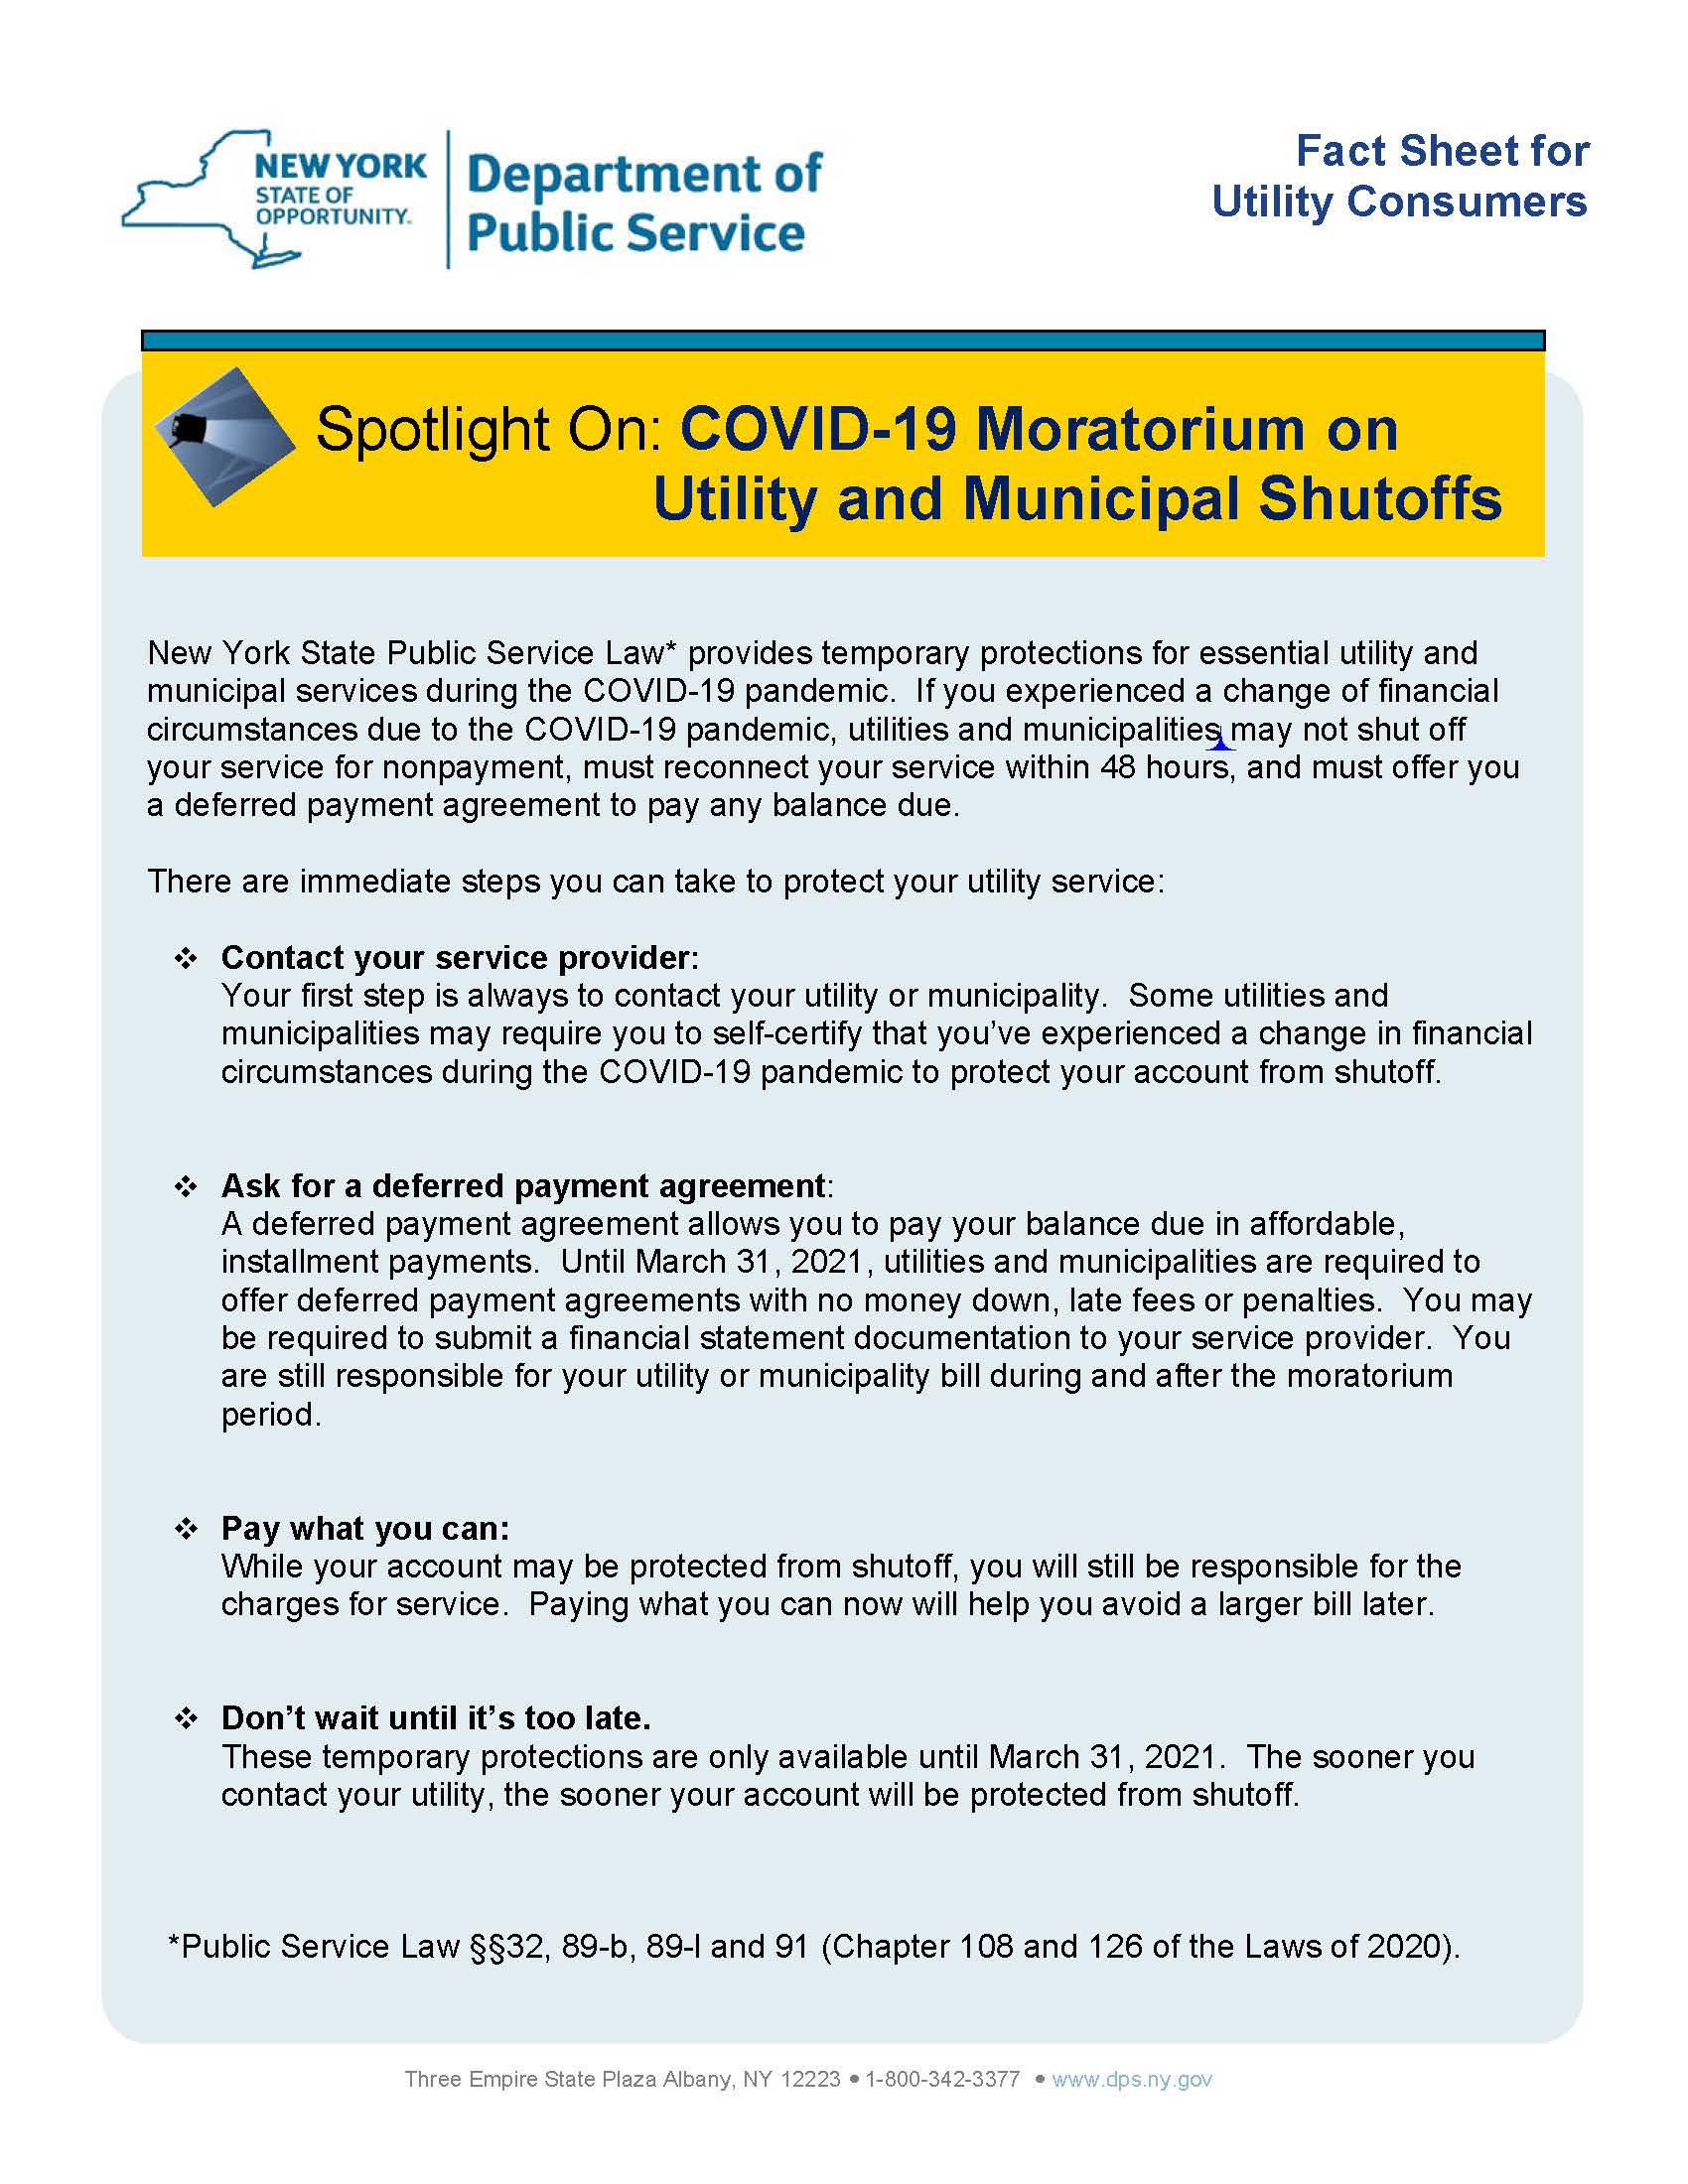 COVID-19 Utility Shutoff Guidelines Factsheet (002)_Page_1